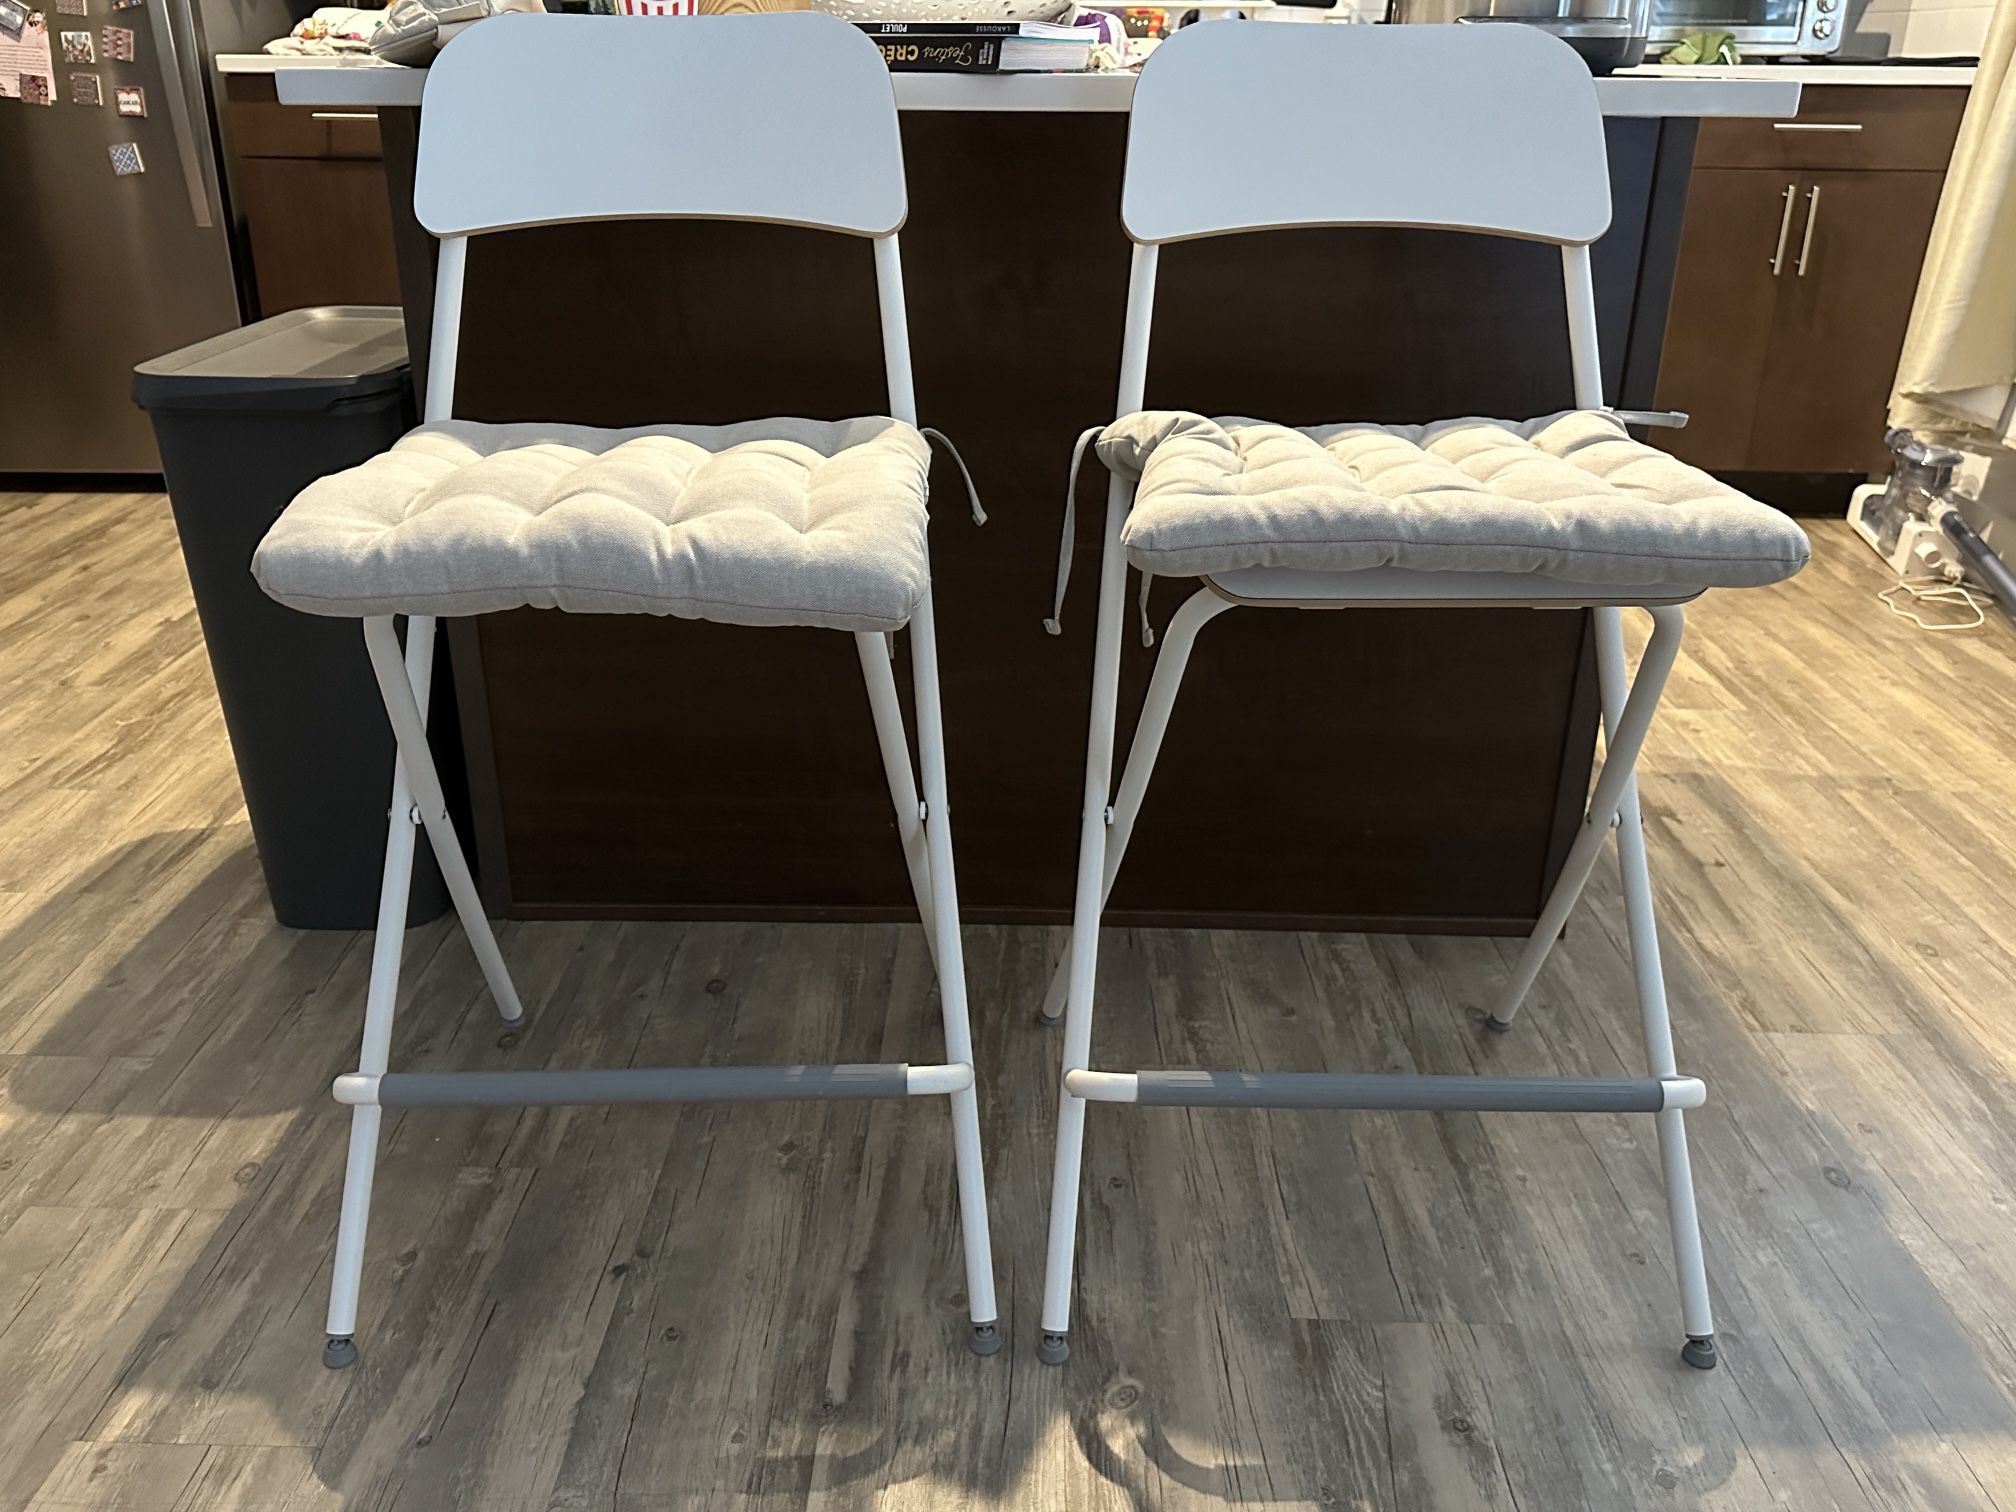 2 IKEA bar stools